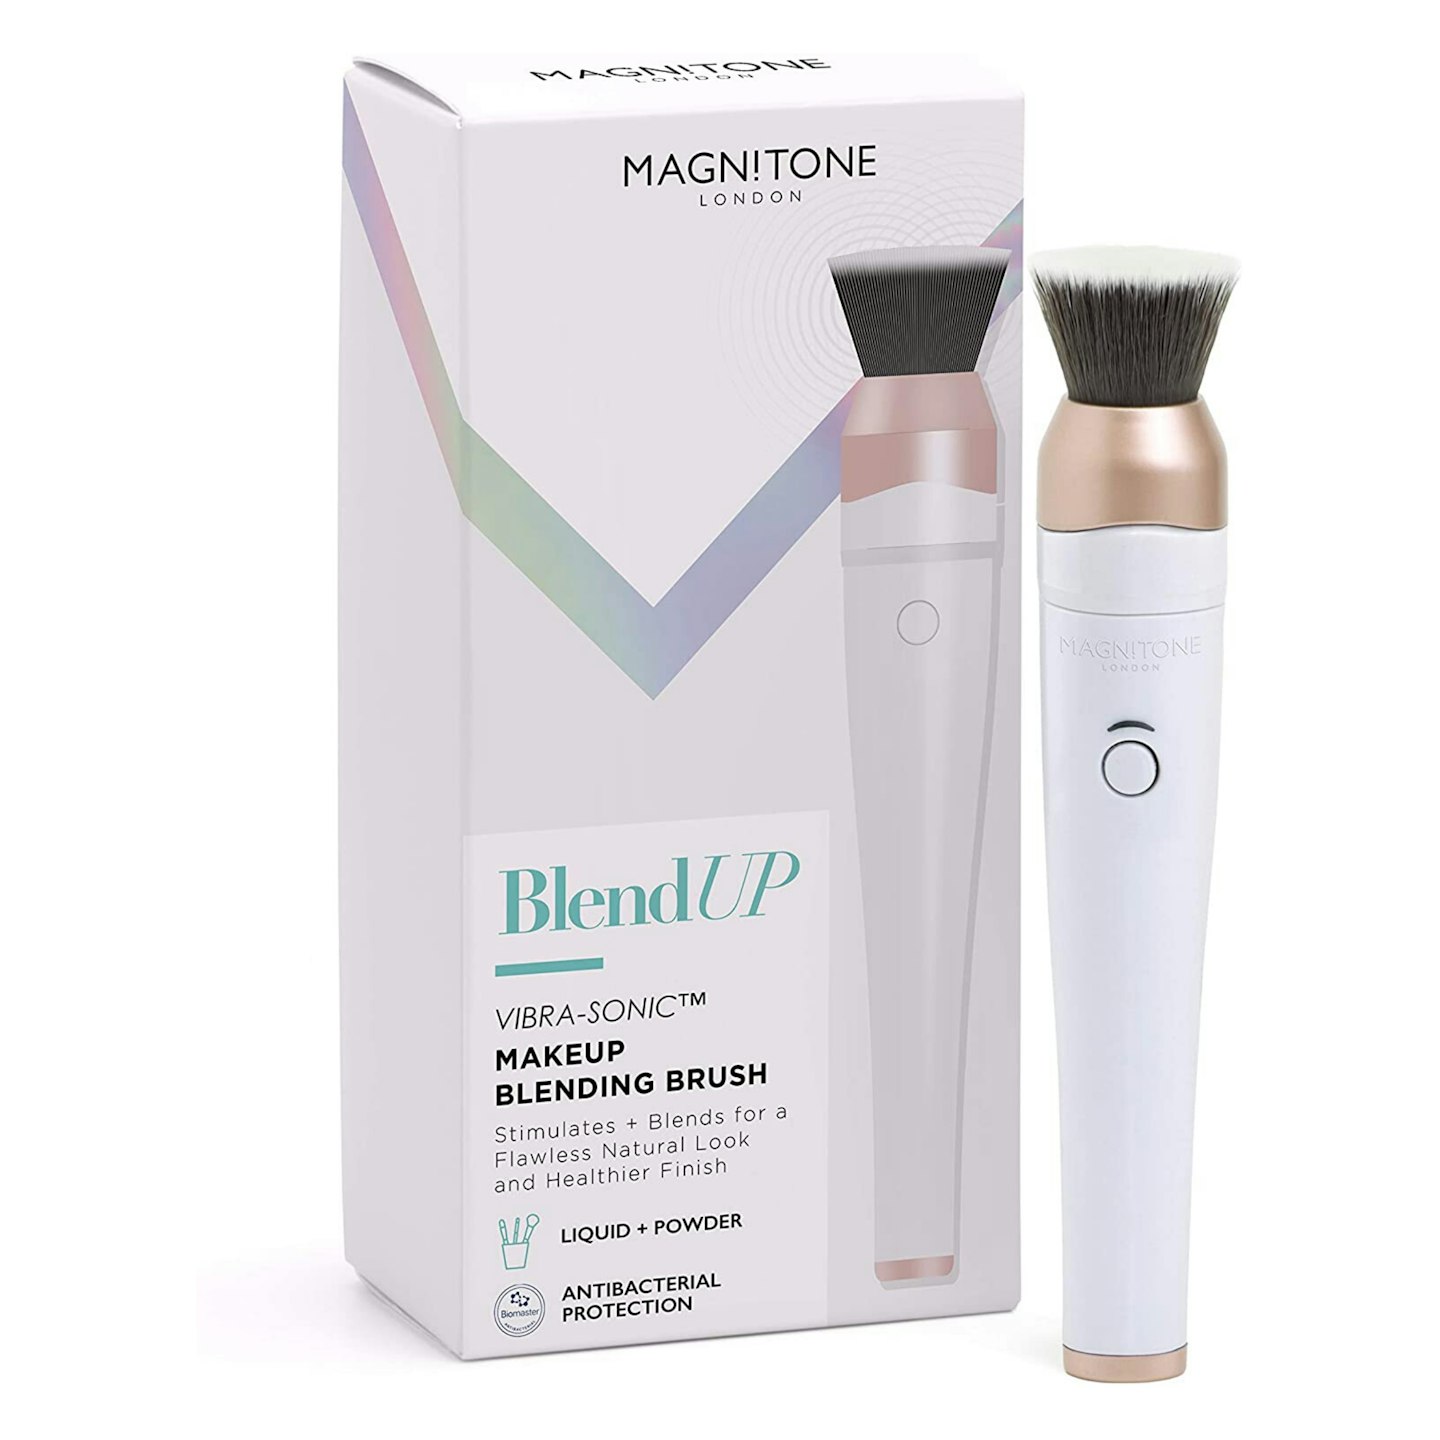 Magnitone BlendUp Vibra-Sonic Makeup Blending Brush